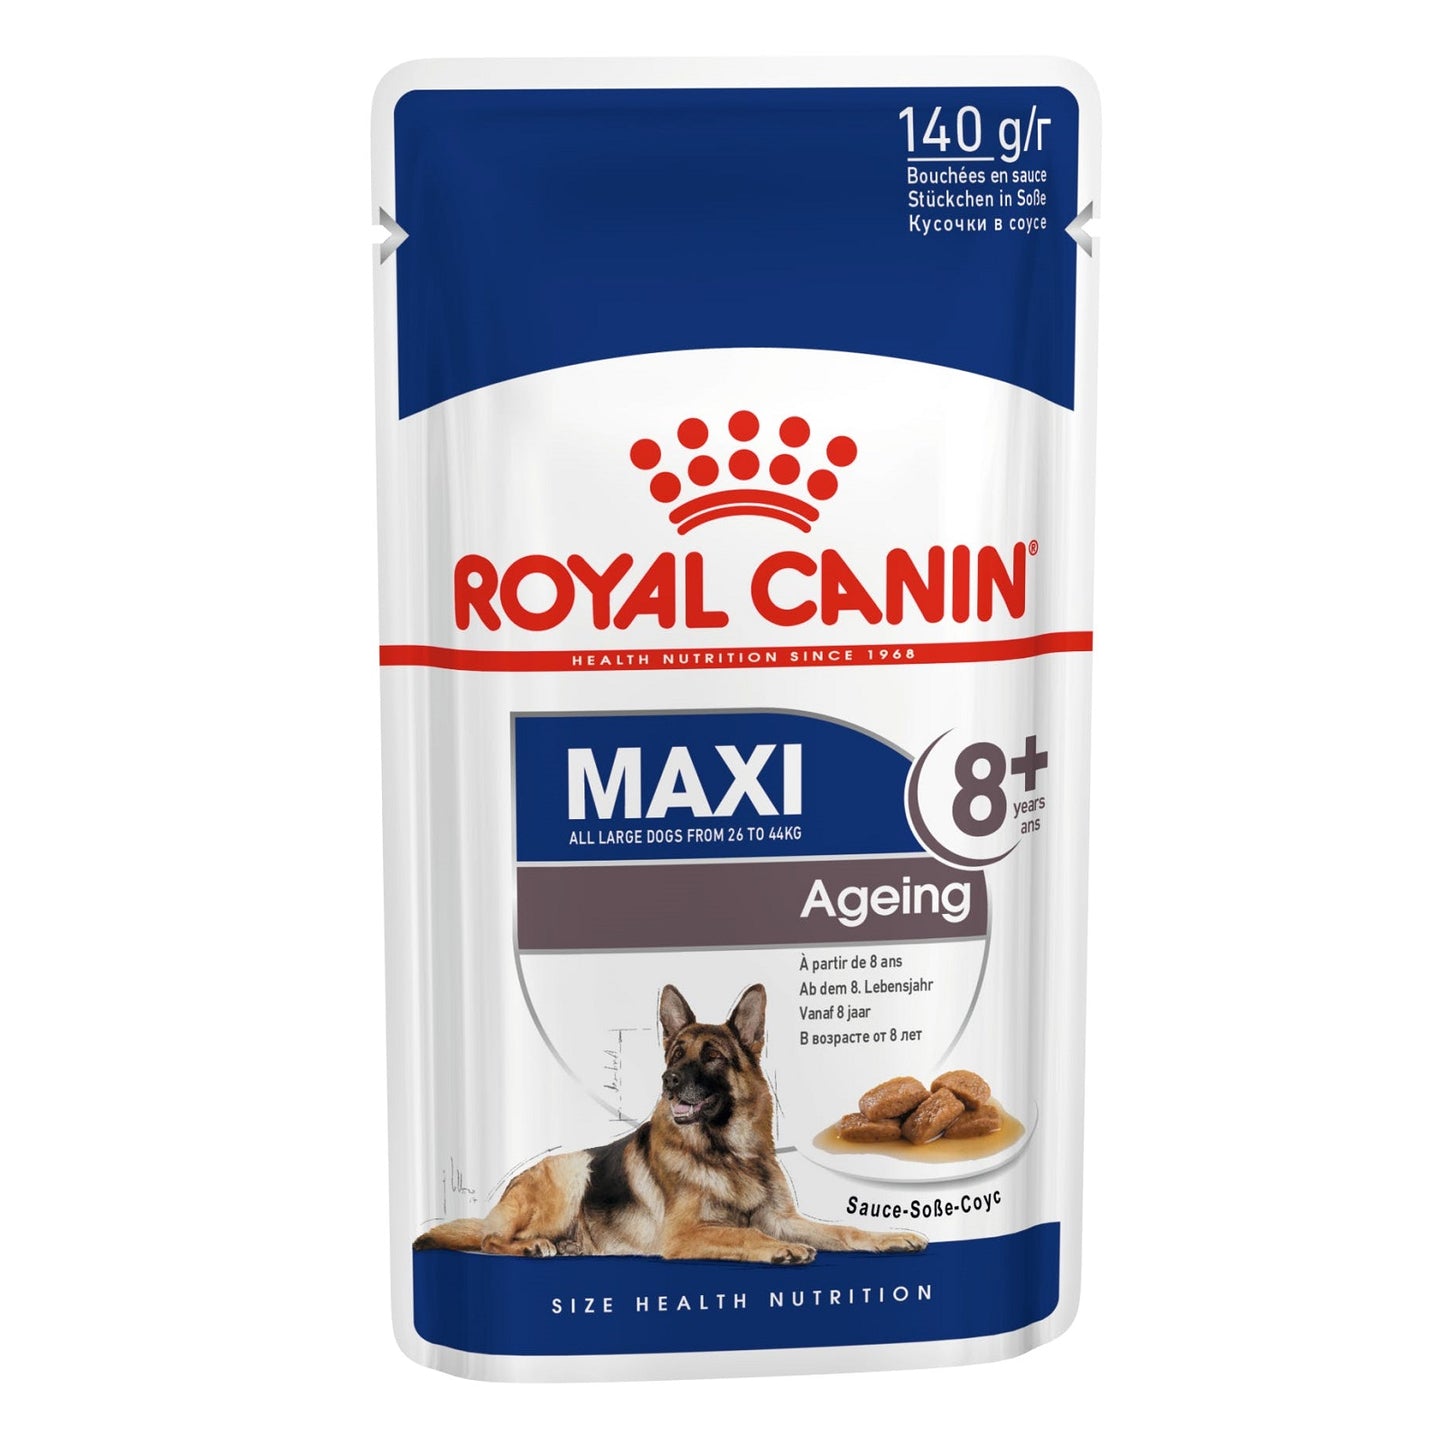 ROYAL CANIN - Maxi 8+ Ageing Pouches (10 x 140g)